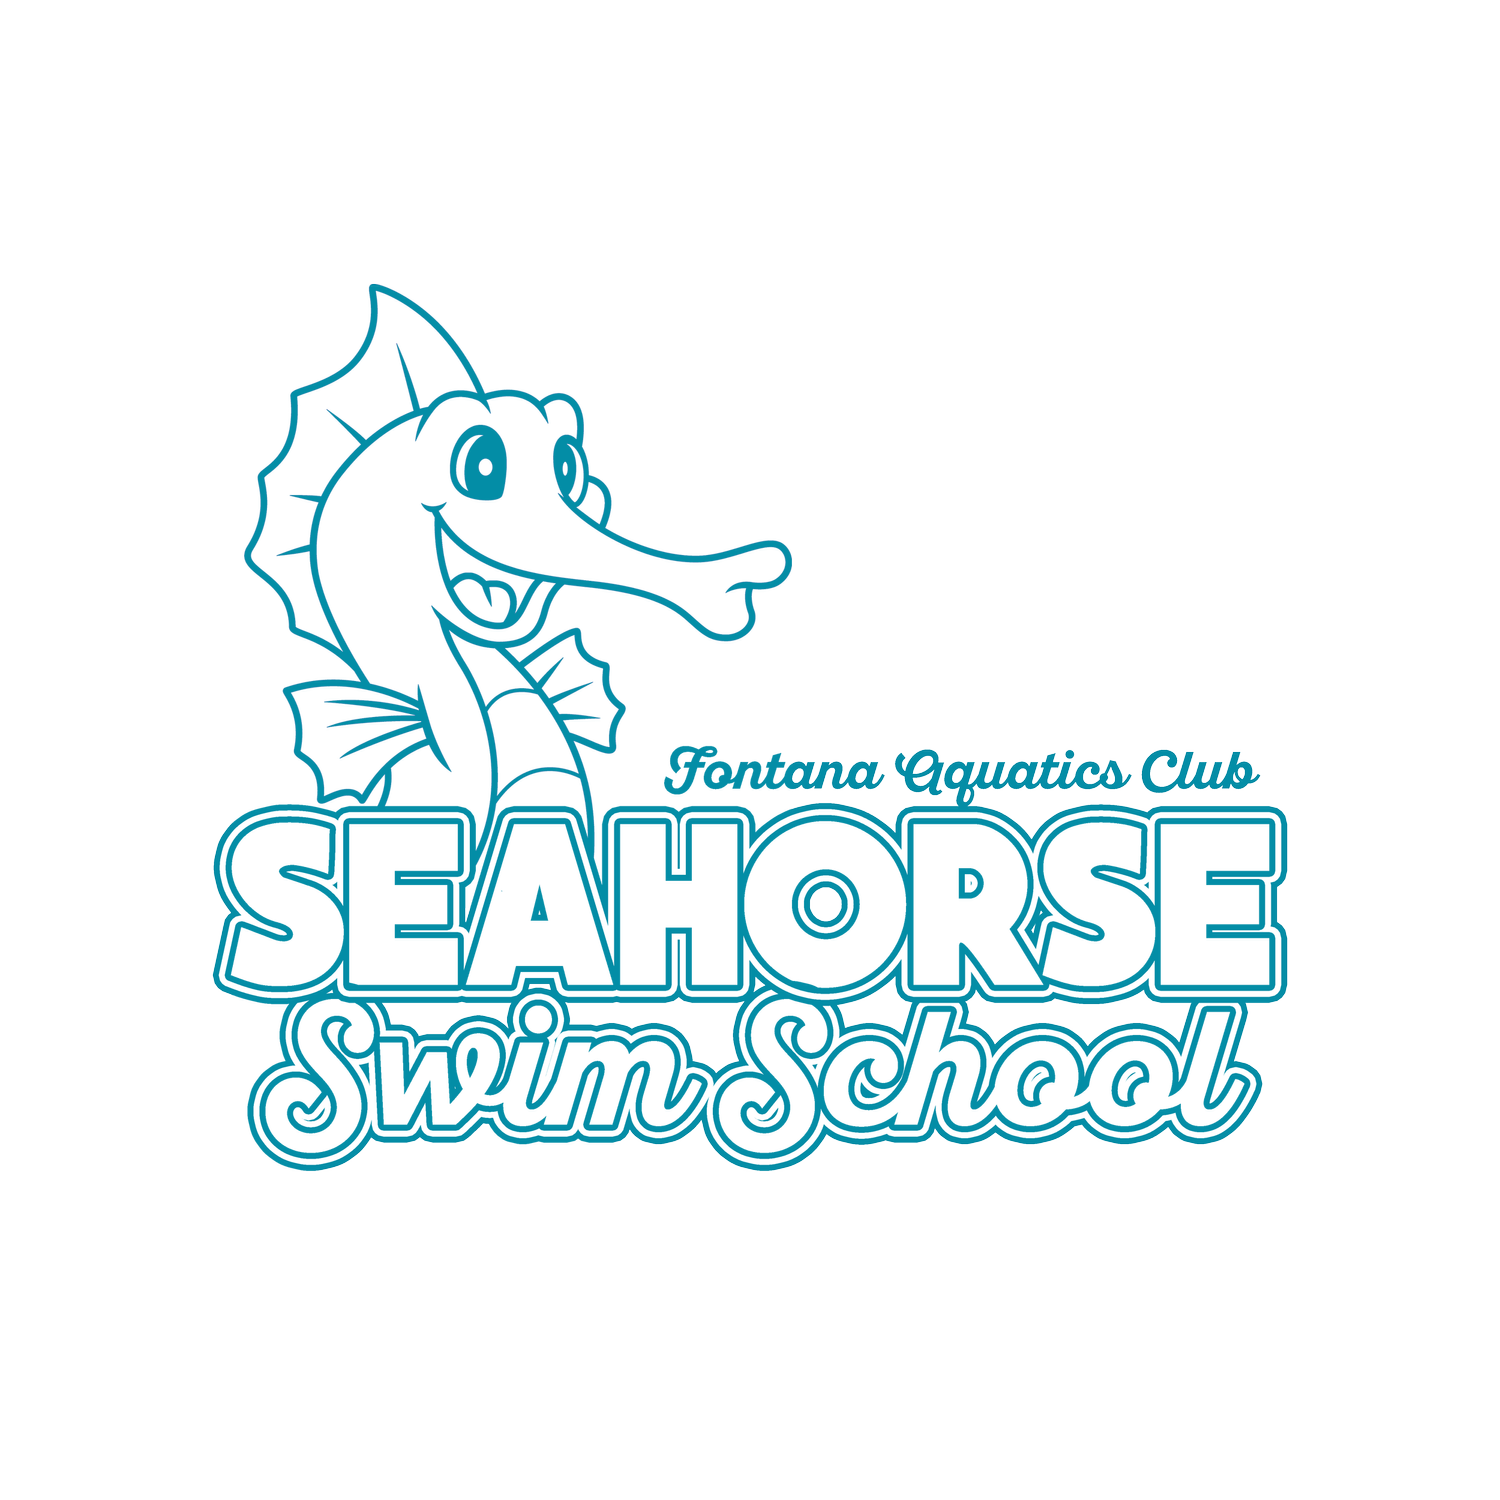 FAC Seahorse Swim School